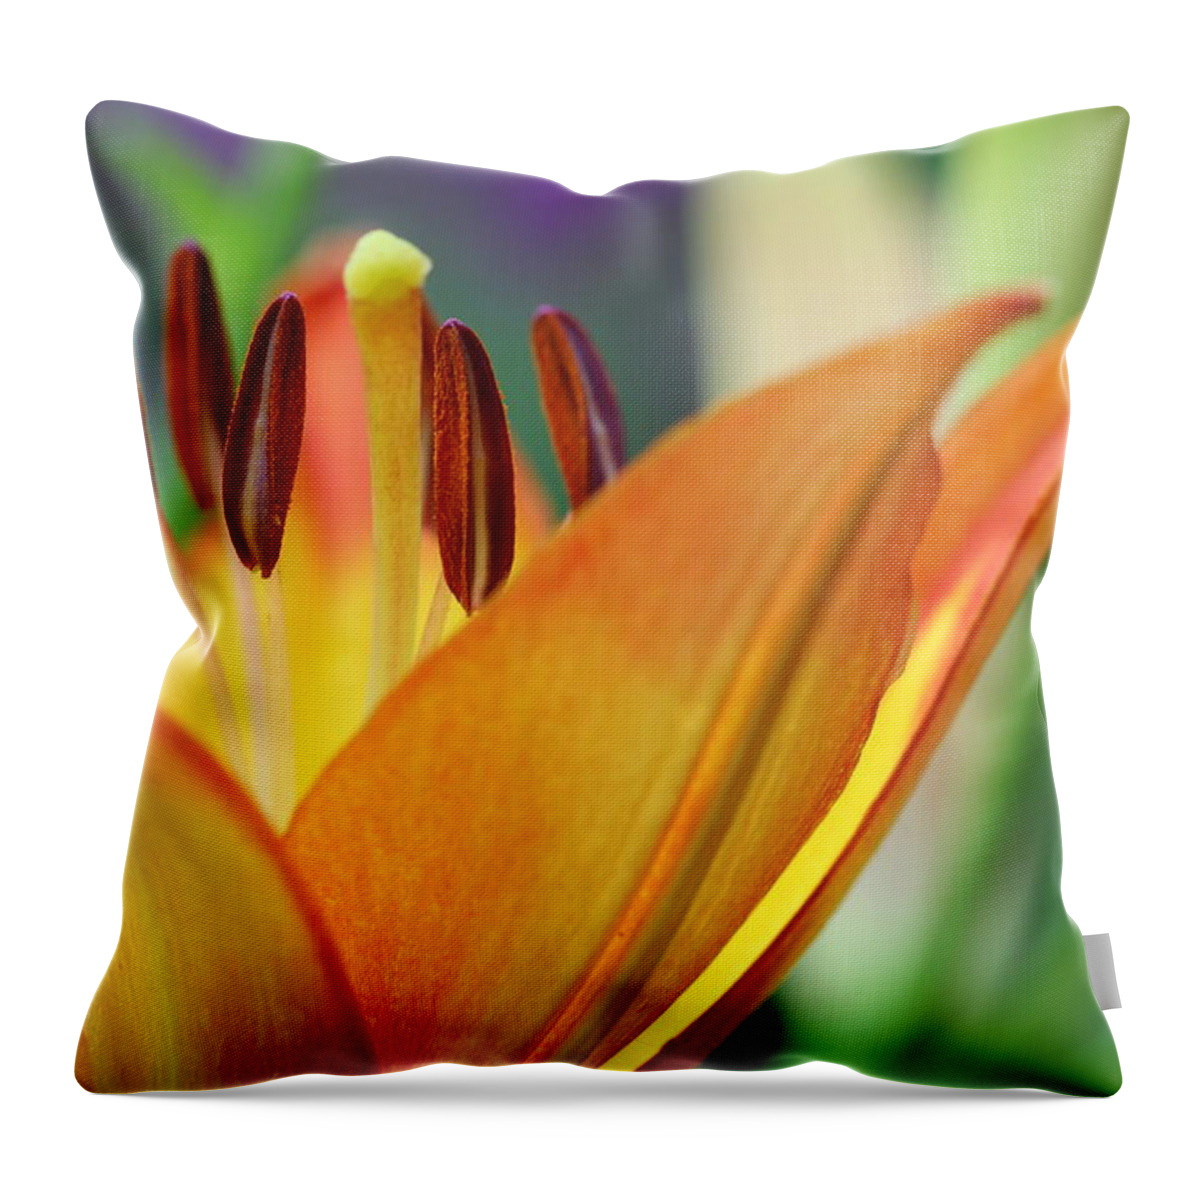 Flower Throw Pillow featuring the photograph Garden Delight by Deborah Crew-Johnson